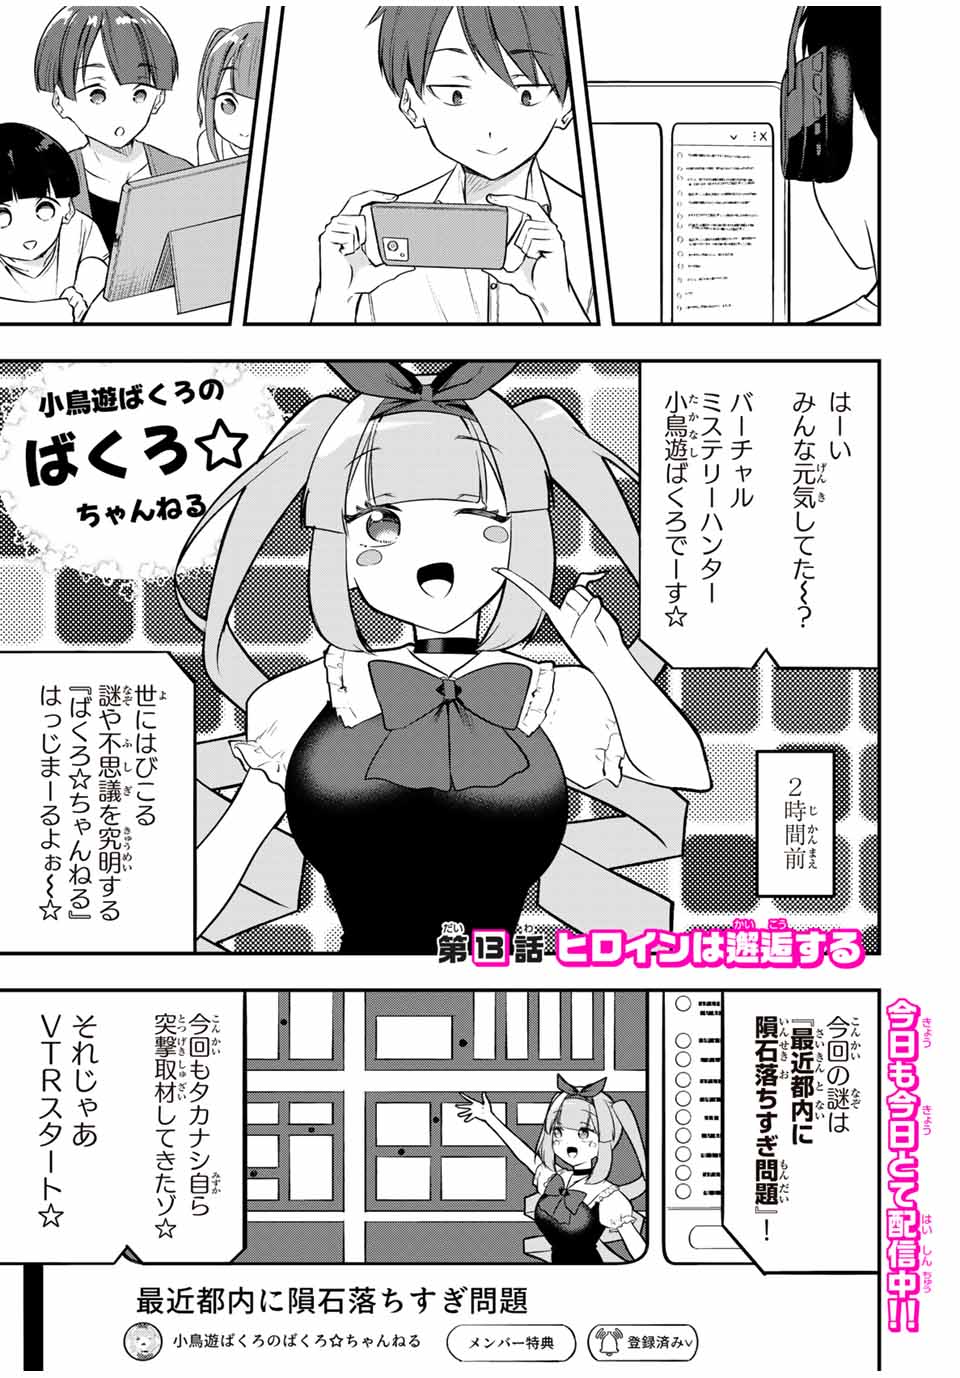 Heroine wa xx Okasegitai - Chapter 13 - Page 1